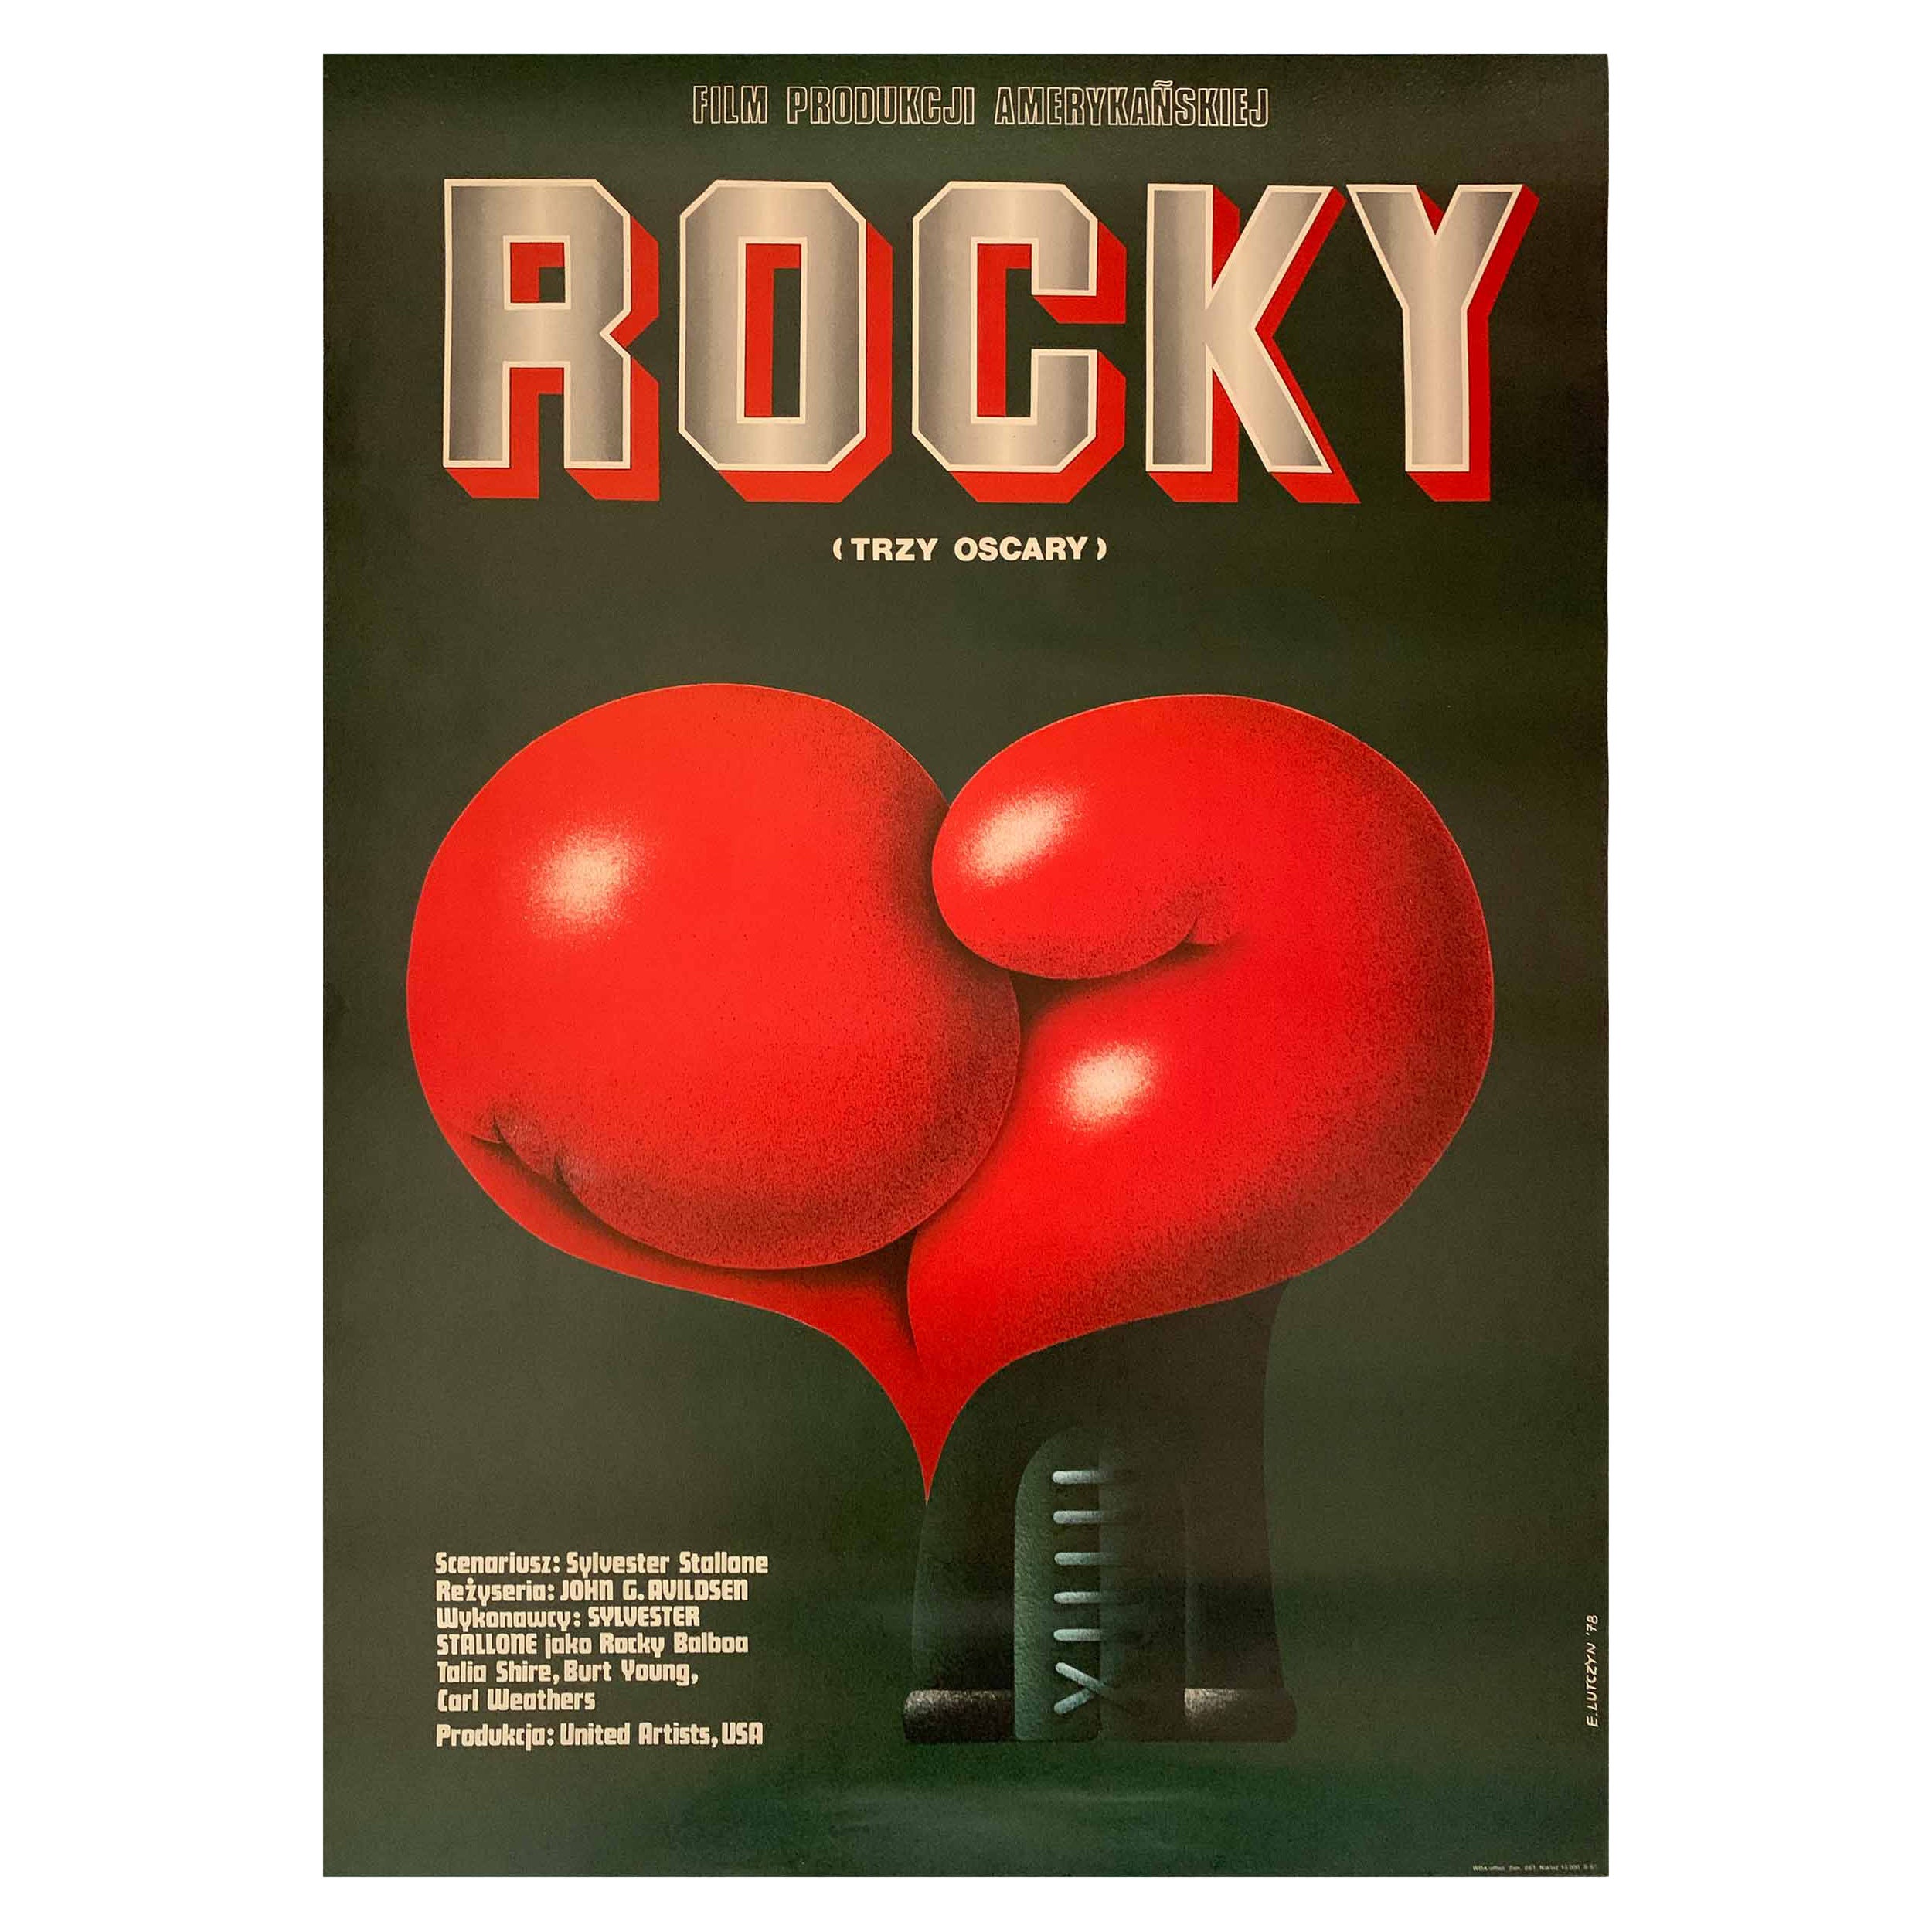 Rocky, Vintage Polish Movie Poster by Edward Lutczyn, 1978 